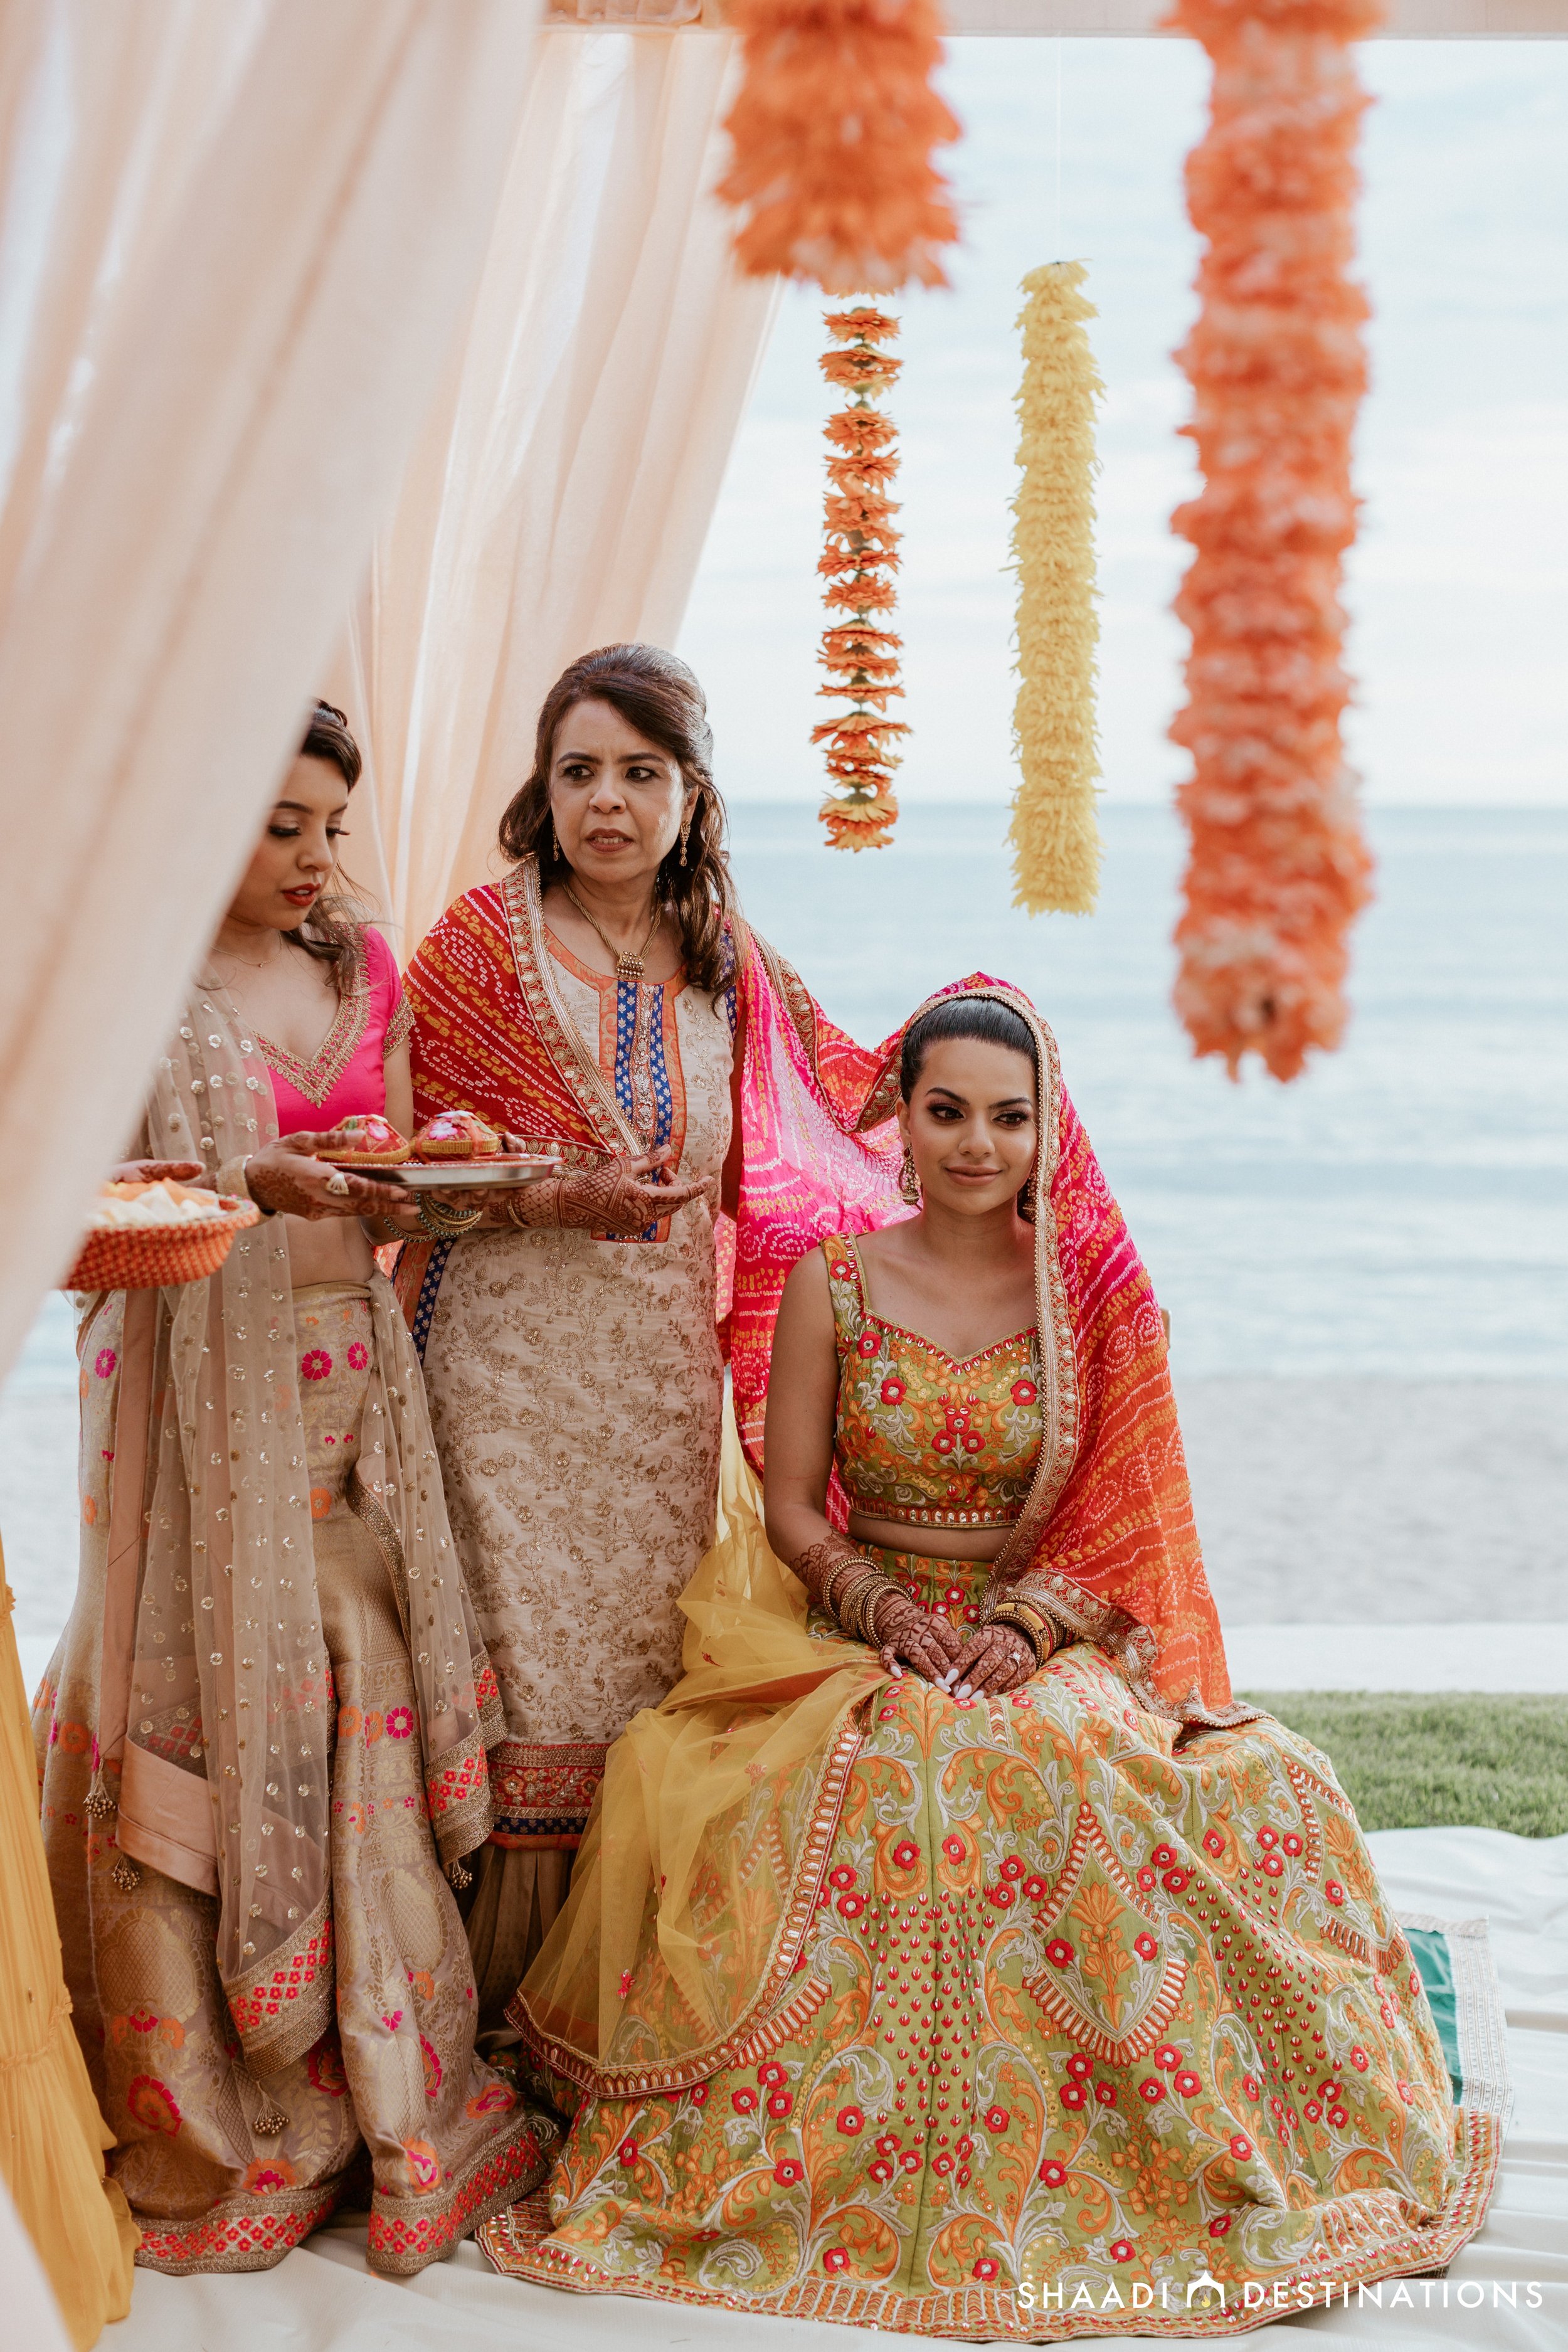 Indian Destination Wedding - Saarah + Sunil - Grand Velas Riviera Nayarit - 92.jpg